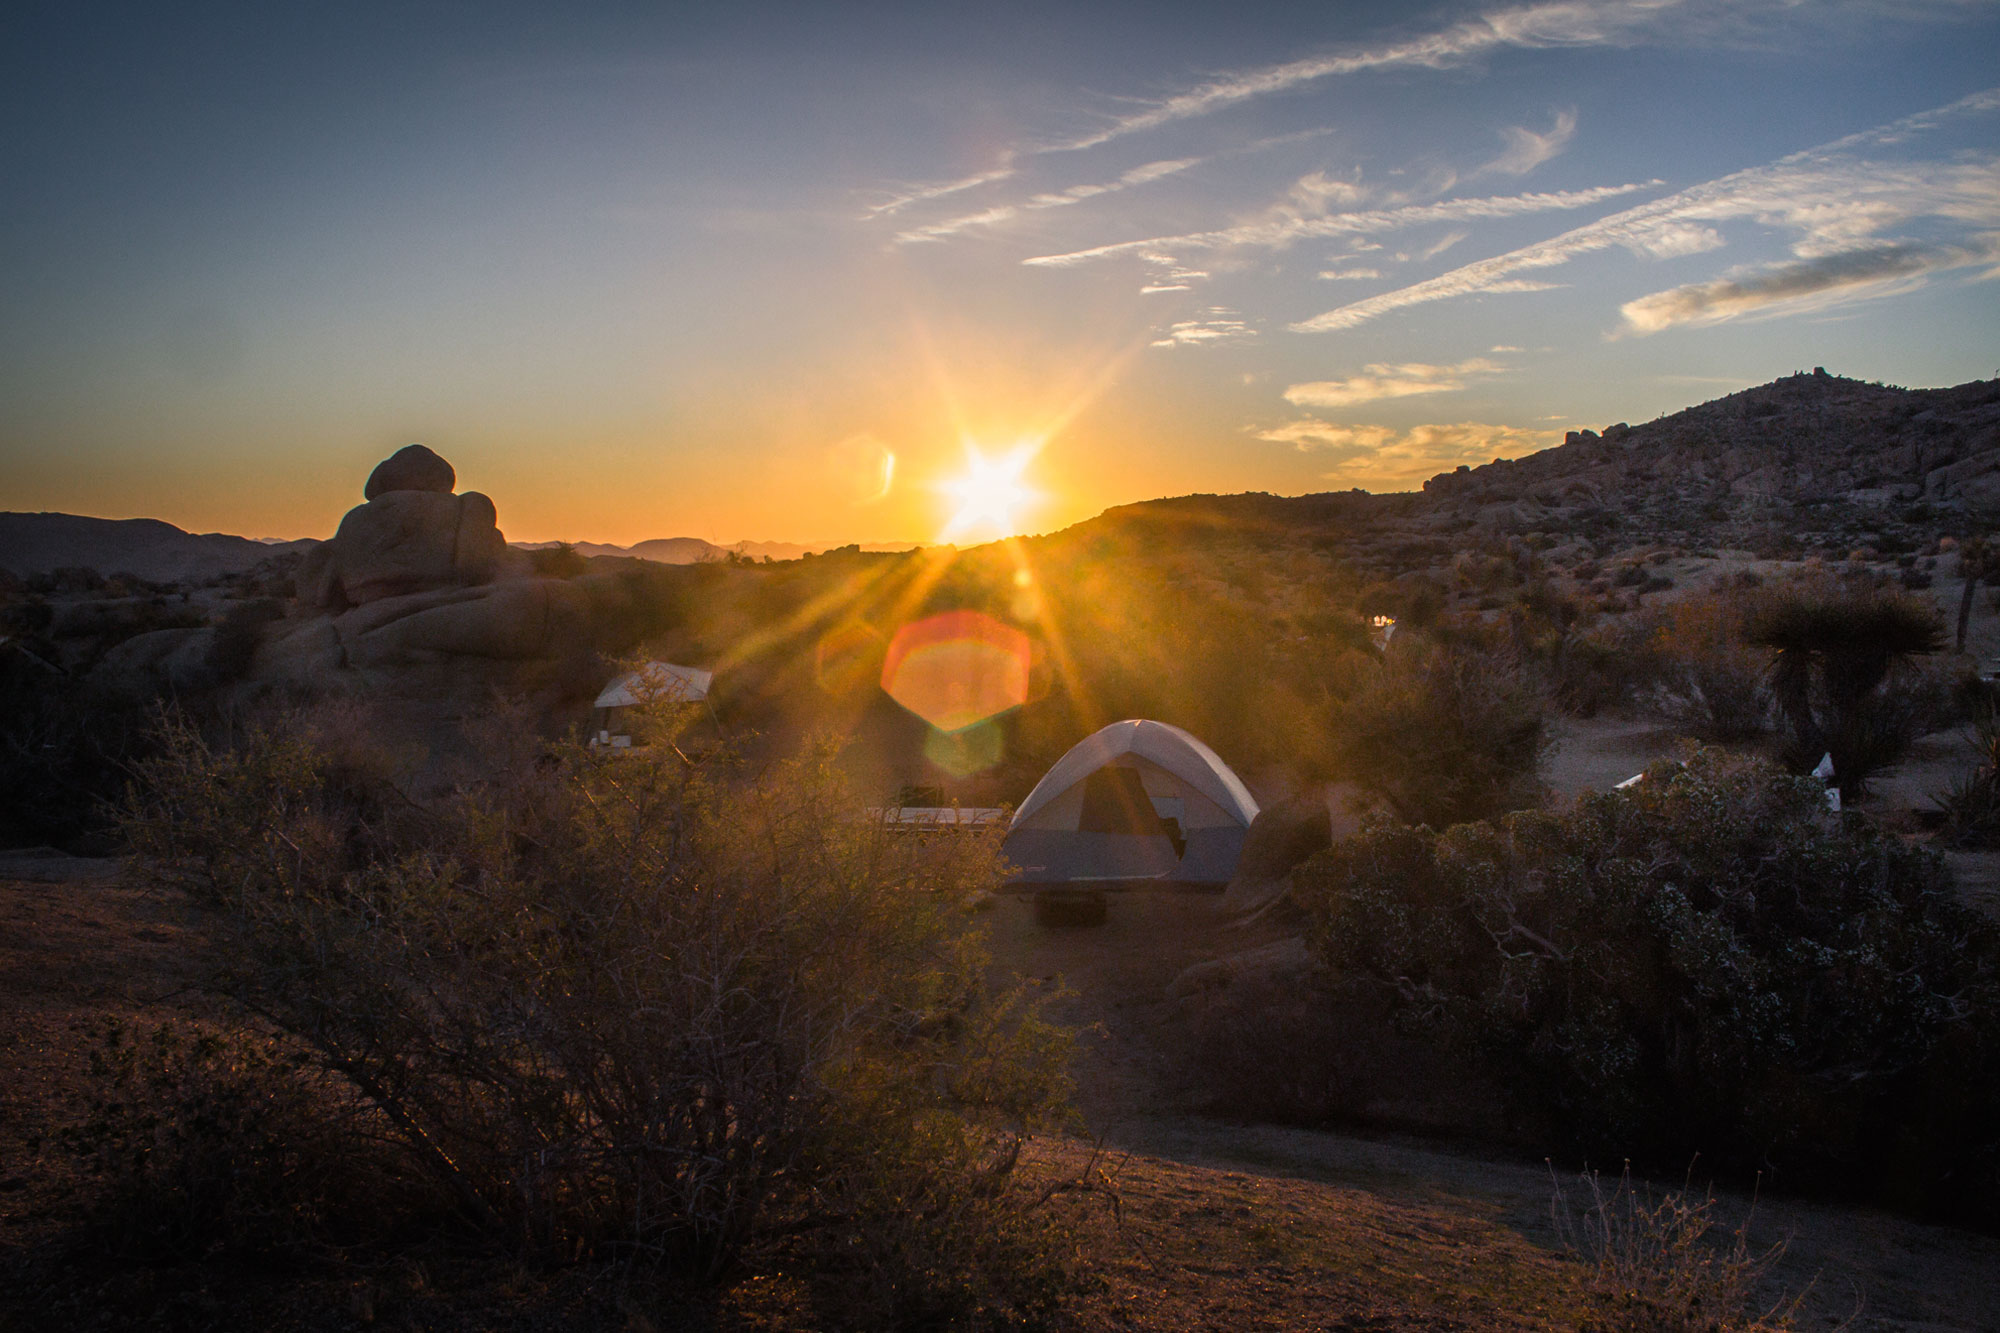 Sunrising over the campsite in Joshua Tree National Park.jpg